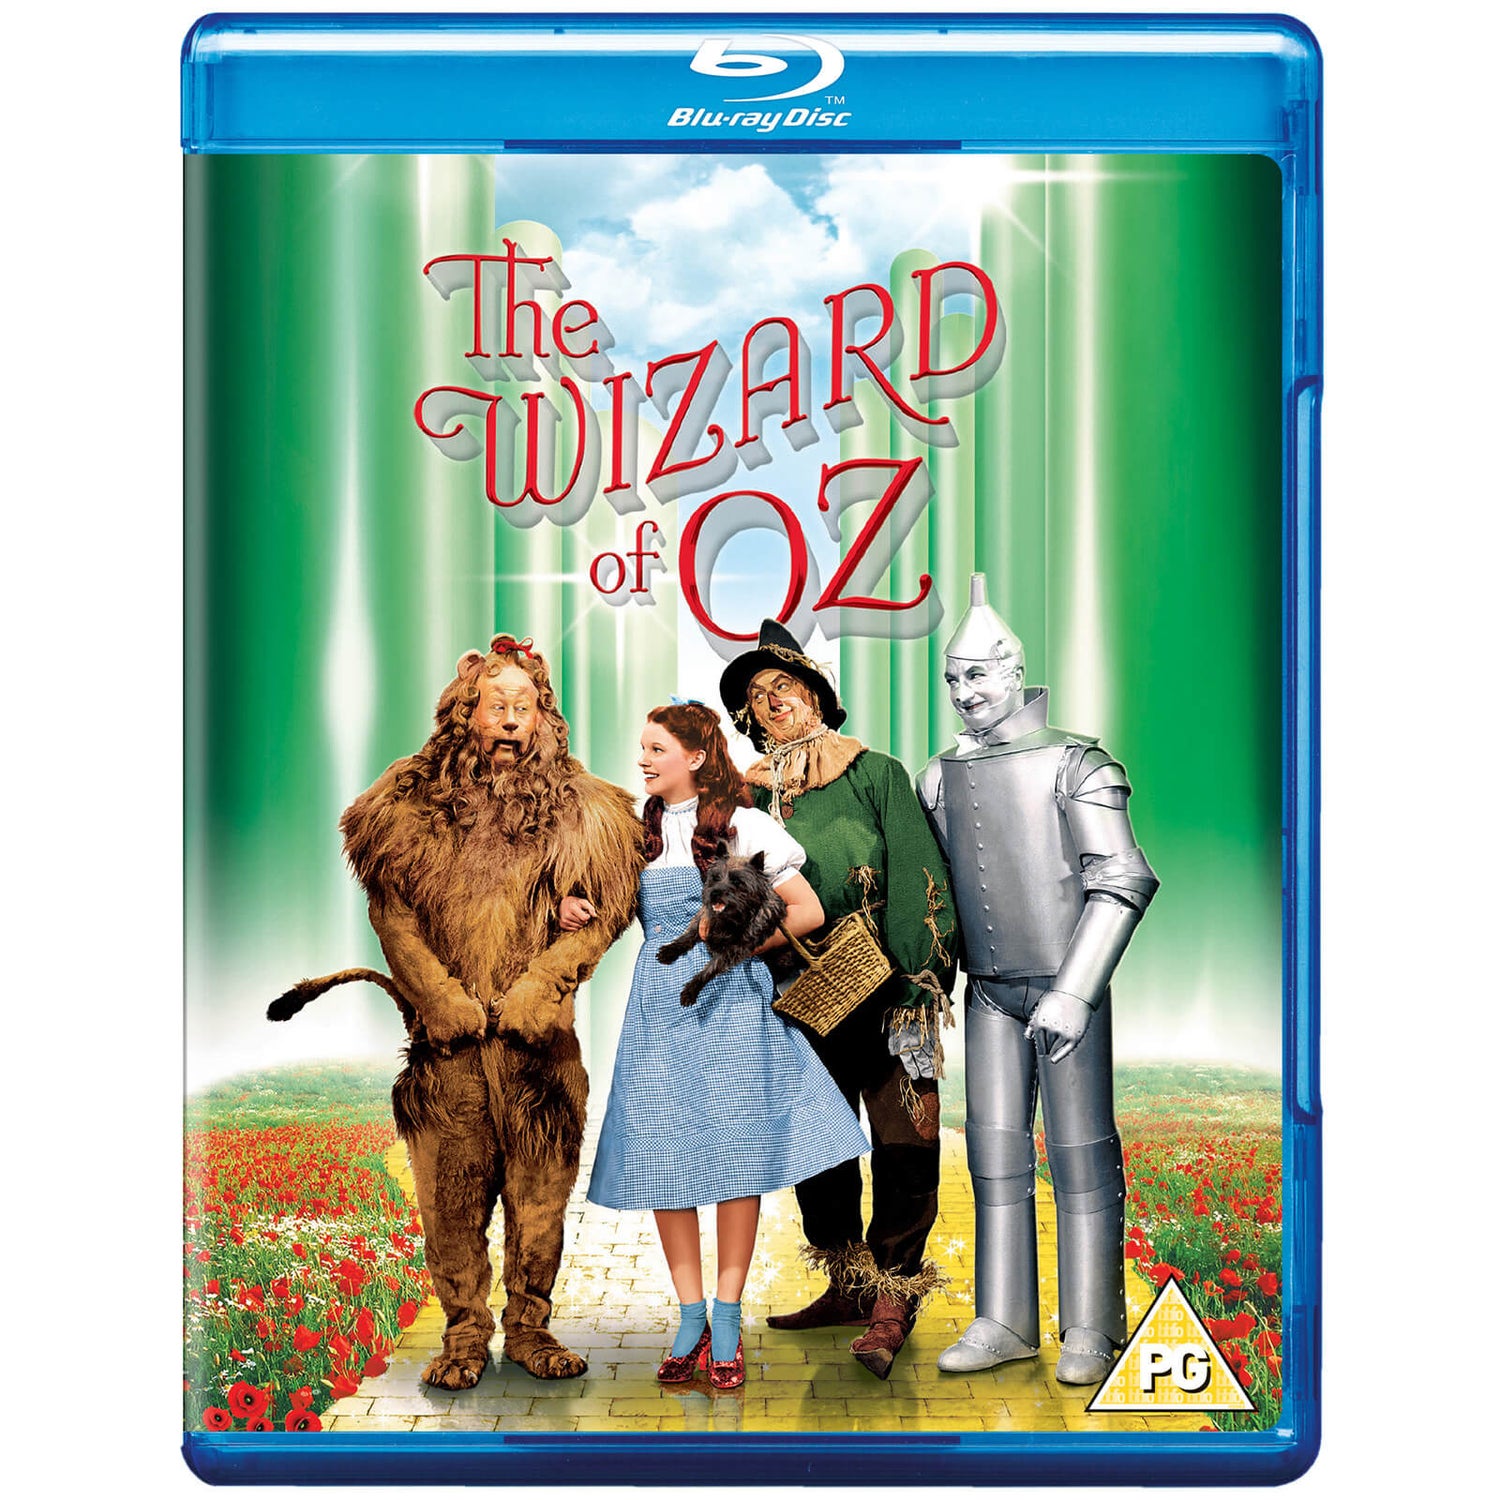 The Wizard of Oz - 75e jubileumeditie